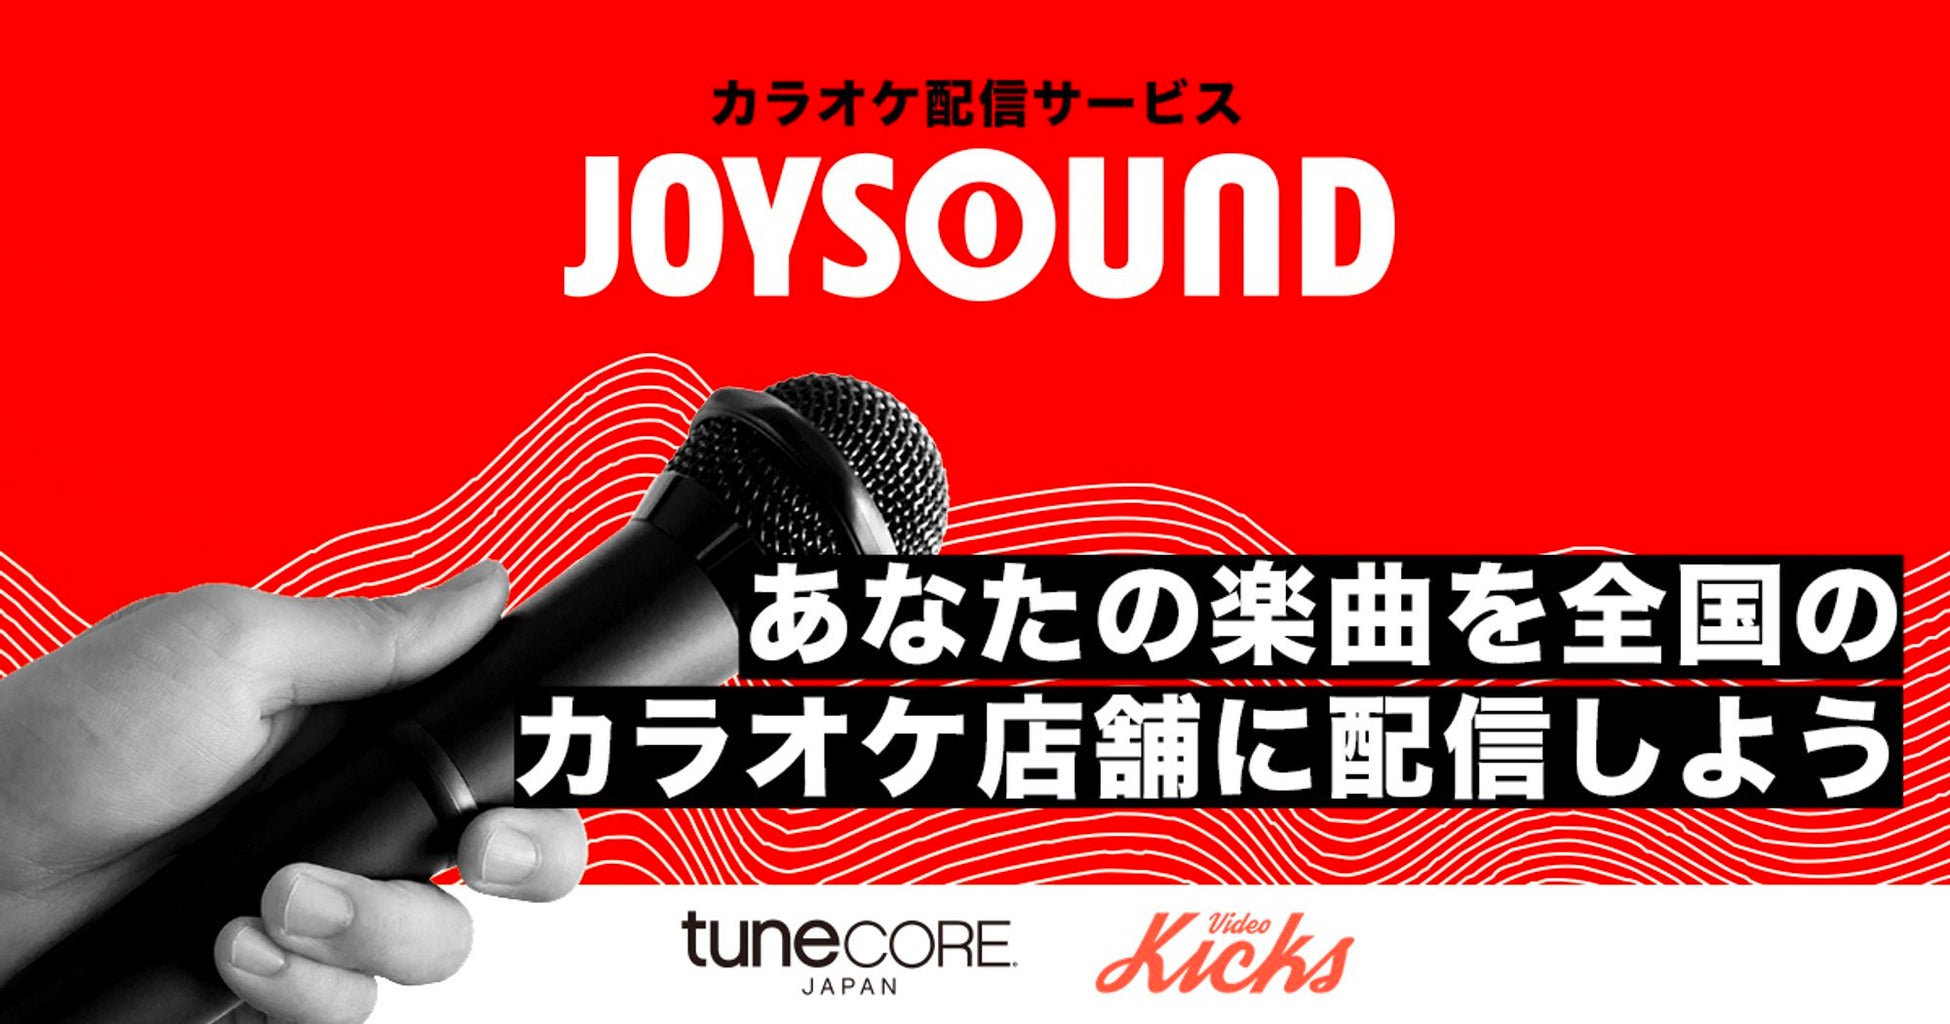 TuneCore Japan 新サービス「カラオケ配信」開始、誰でも「JOYSOUND カラオケ店舗」へ楽曲配信が可能に